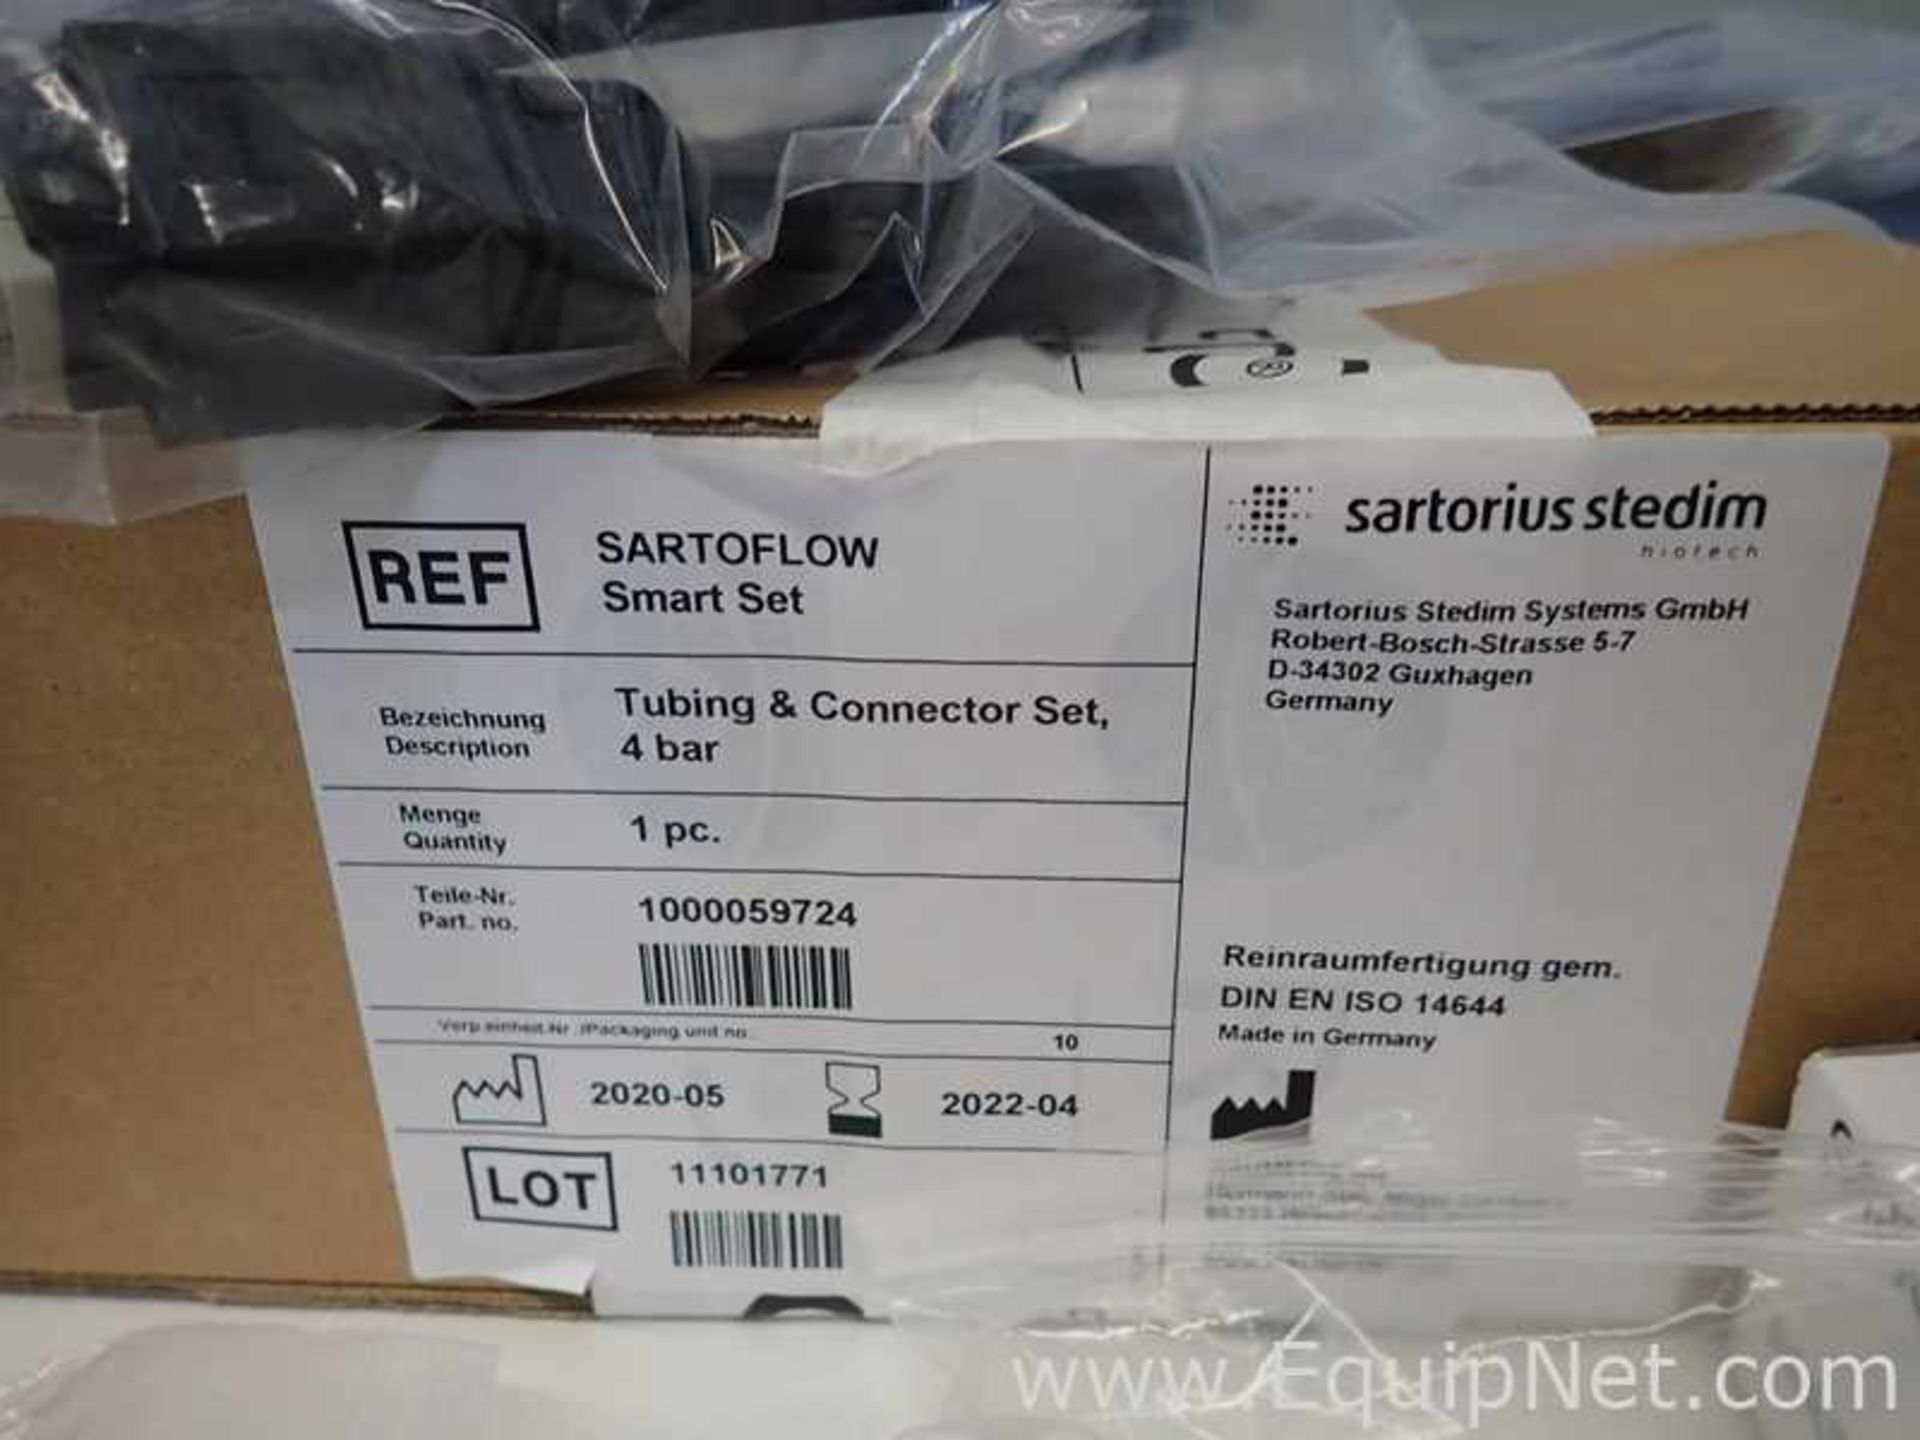 Unused Sartorius Stedim Systems GmbH Sartoflow Smart Crossflow System with Accessories - Image 7 of 14